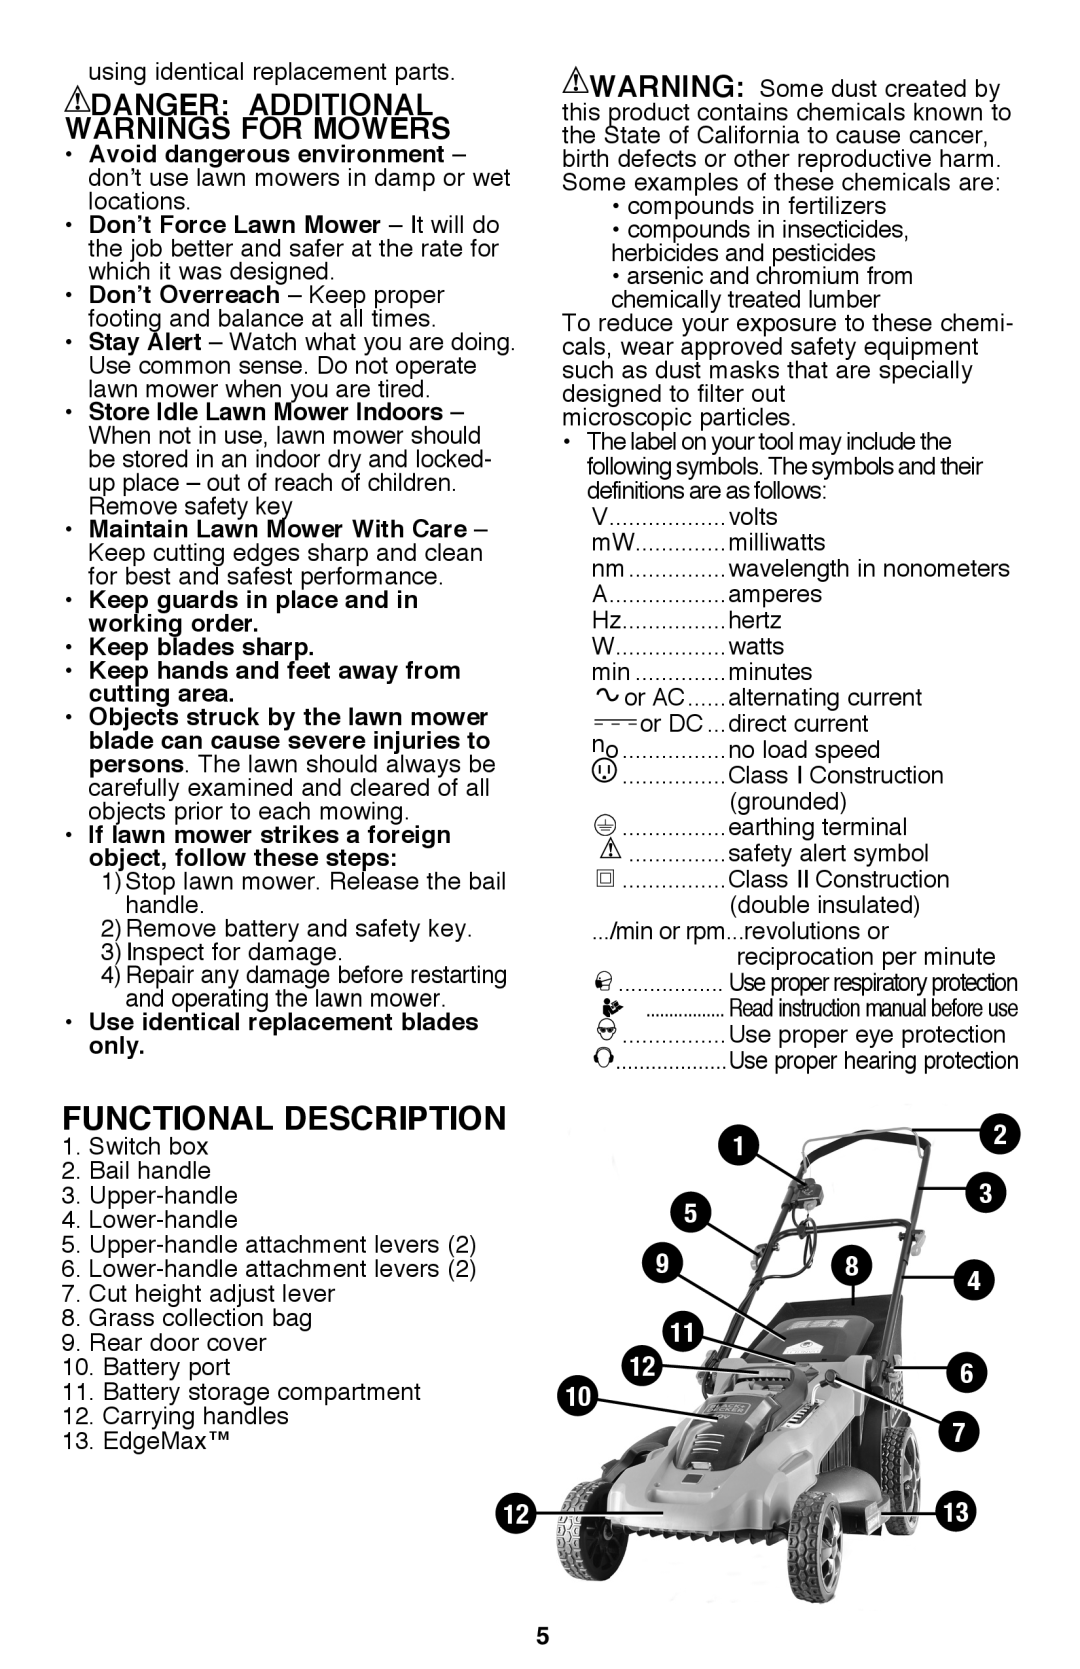 Black & Decker CM2040 instruction manual Functional Description, Danger Additional Warnings For Mowers 